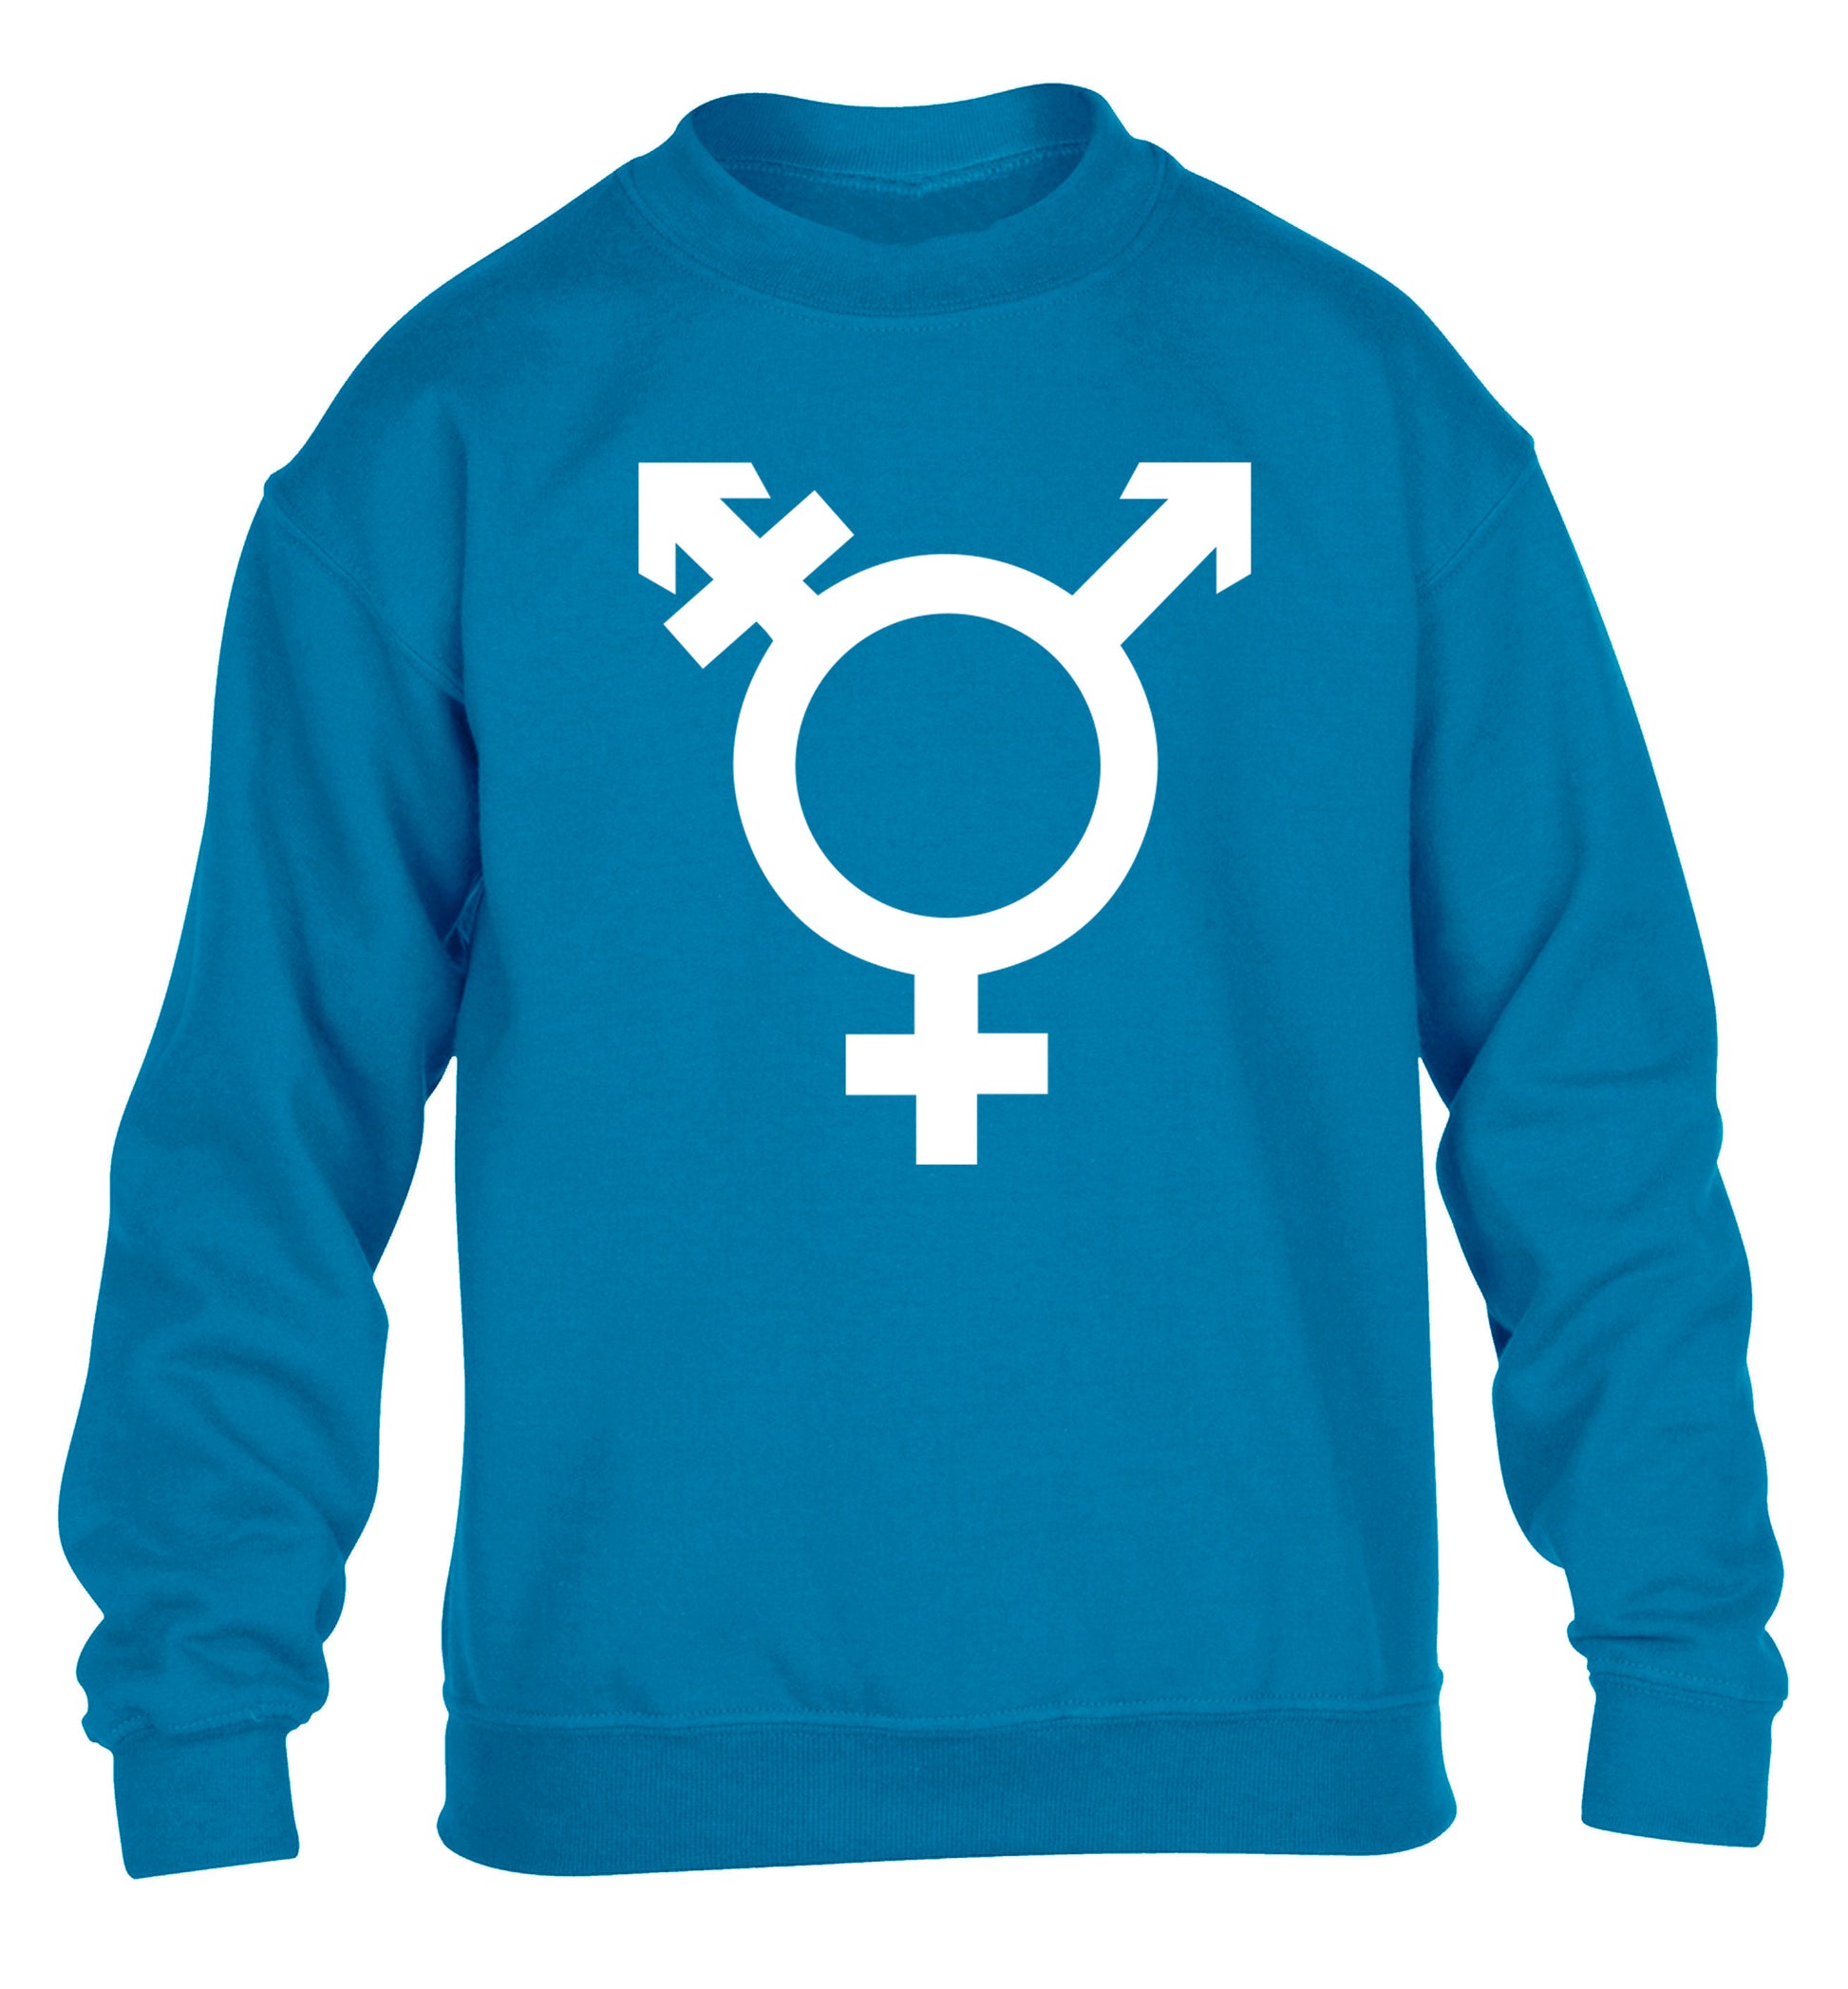 Gender neutral symbol large children's blue sweater 12-14 Years